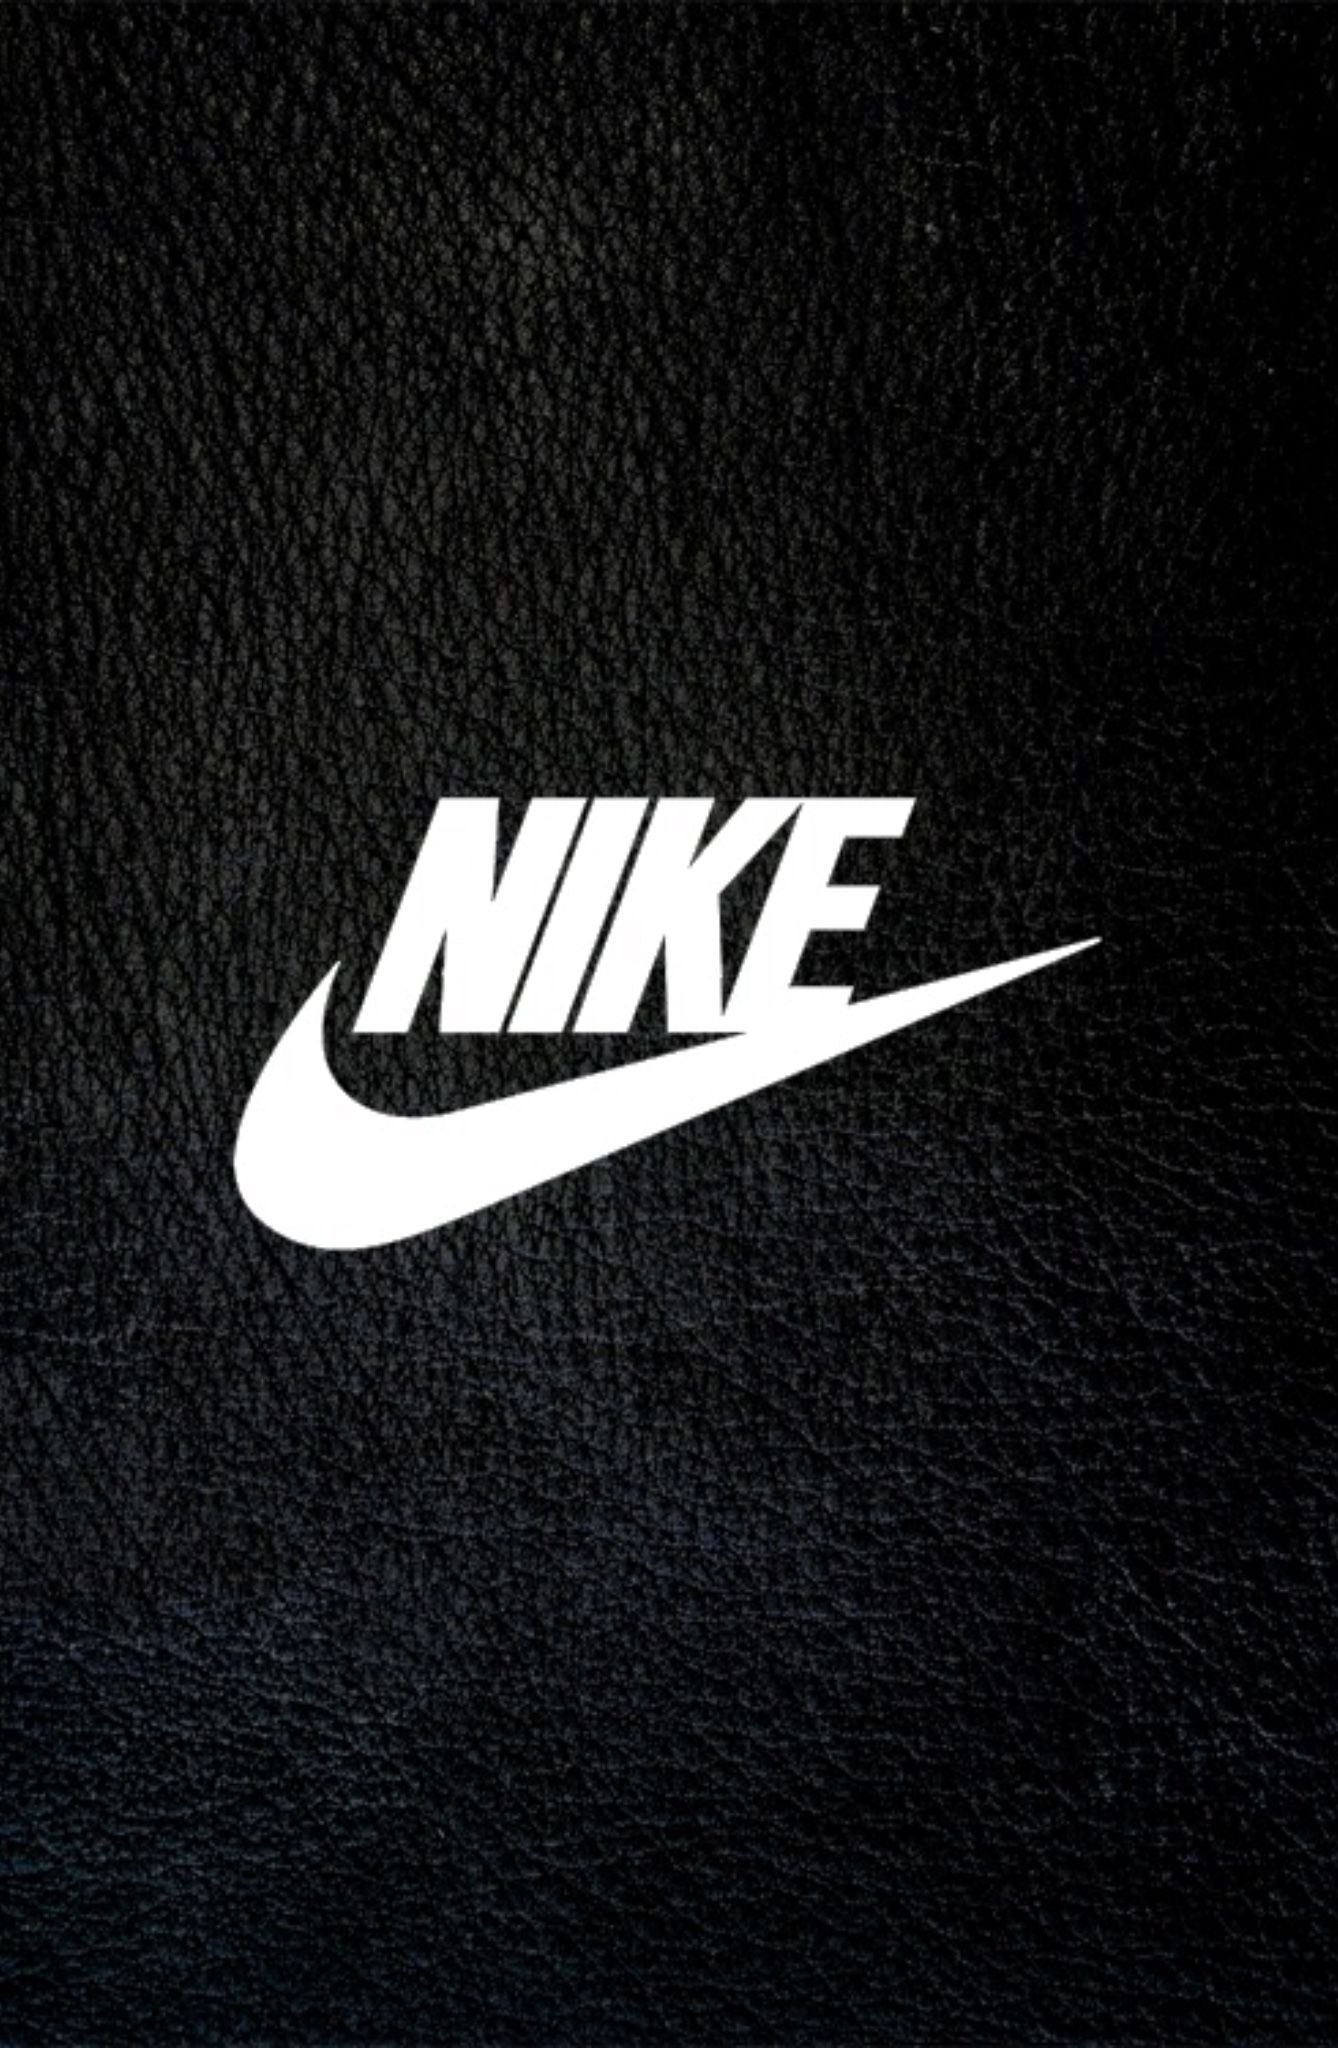 Тема найк. Обои Nike. Найк на черном фоне. Найк логотип. Логотип найк на черном фоне.